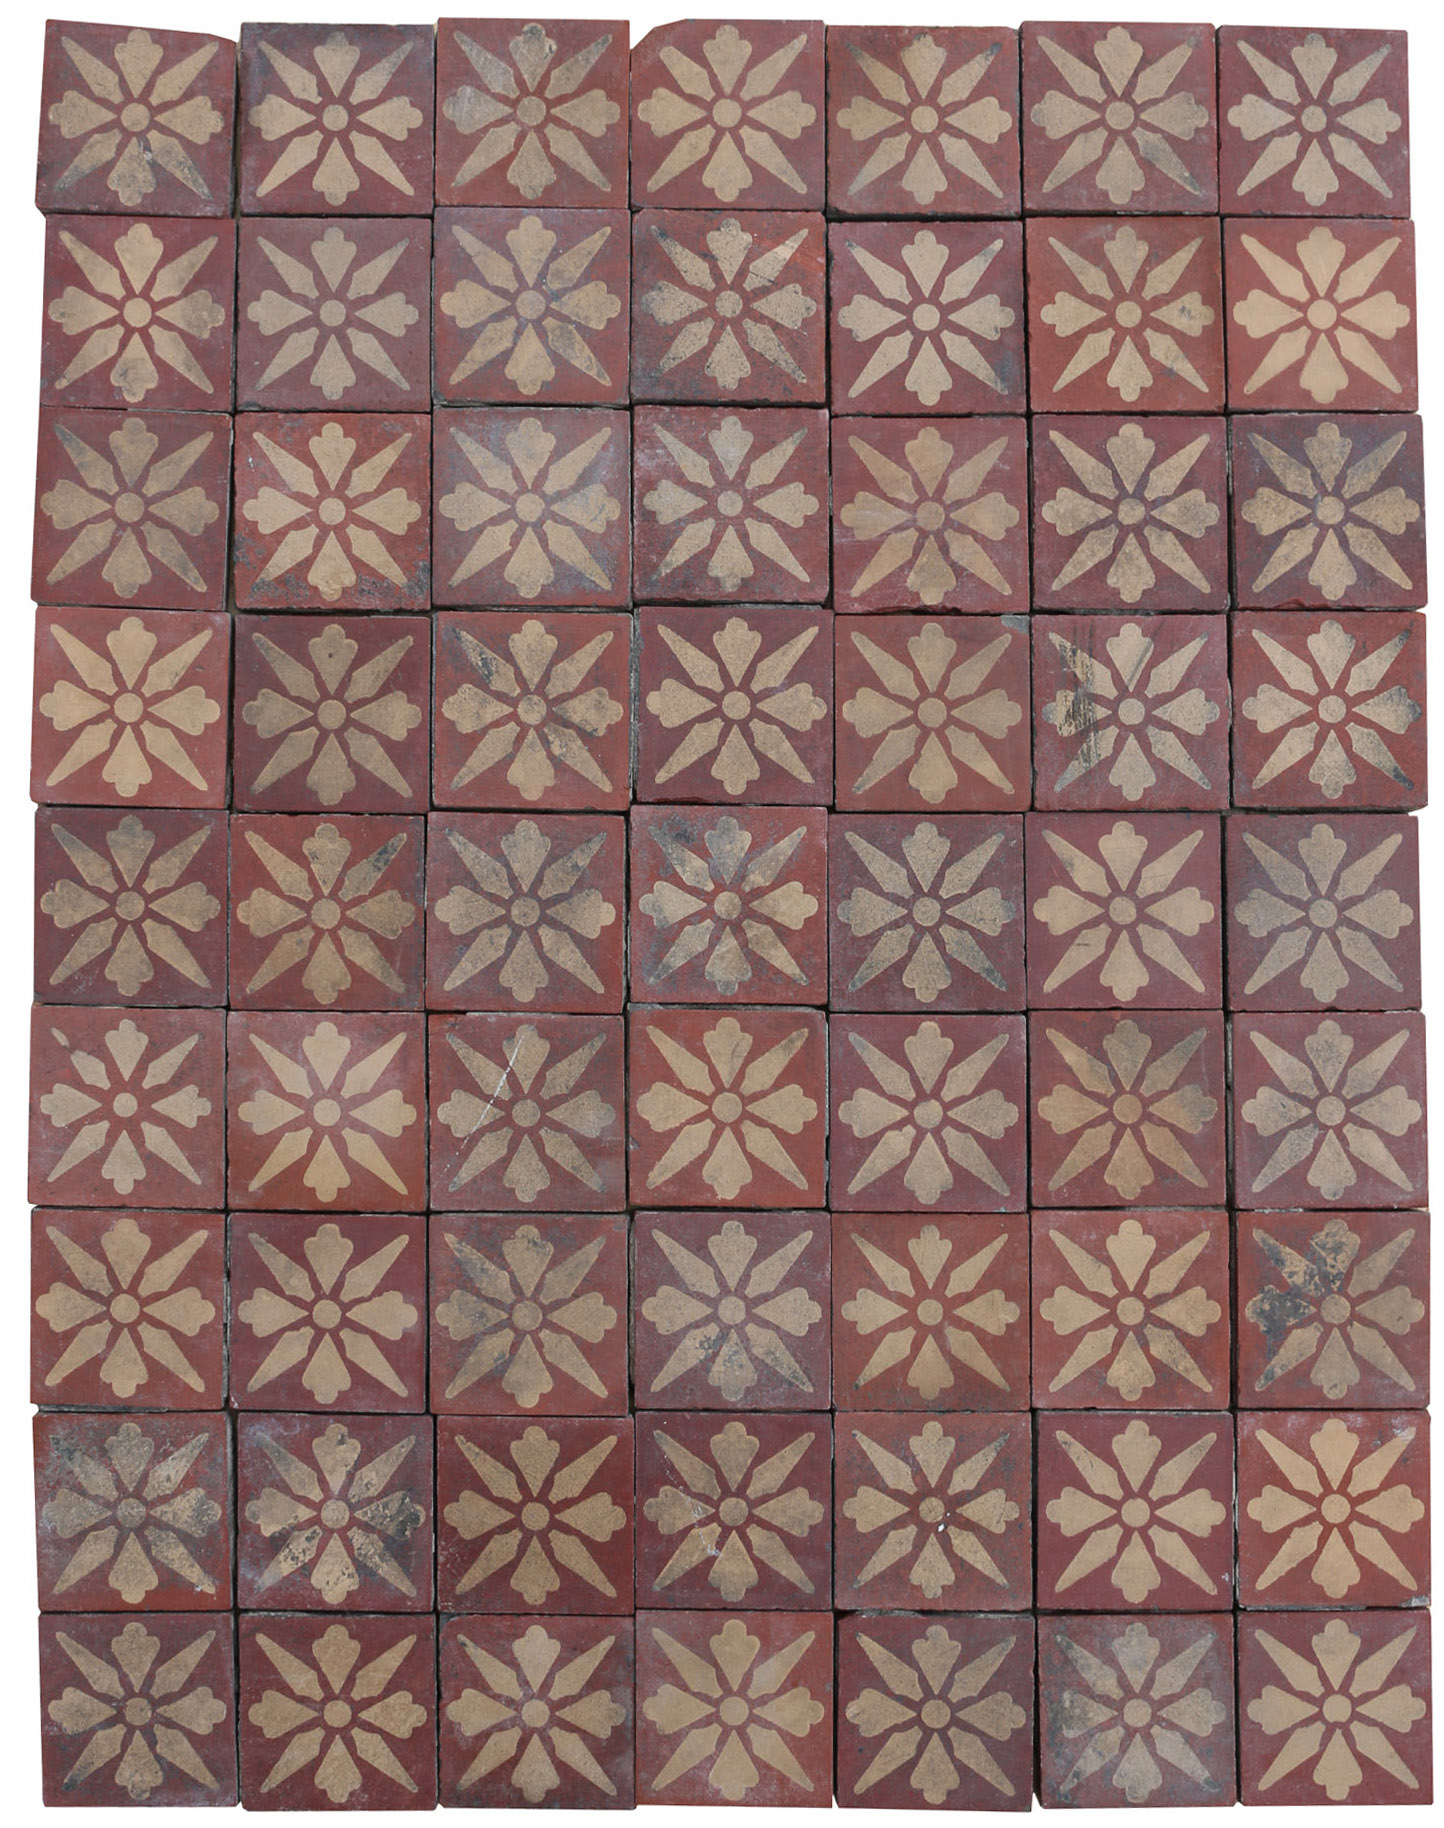 63 Antique Encaustic Floor Tiles Uk Heritage